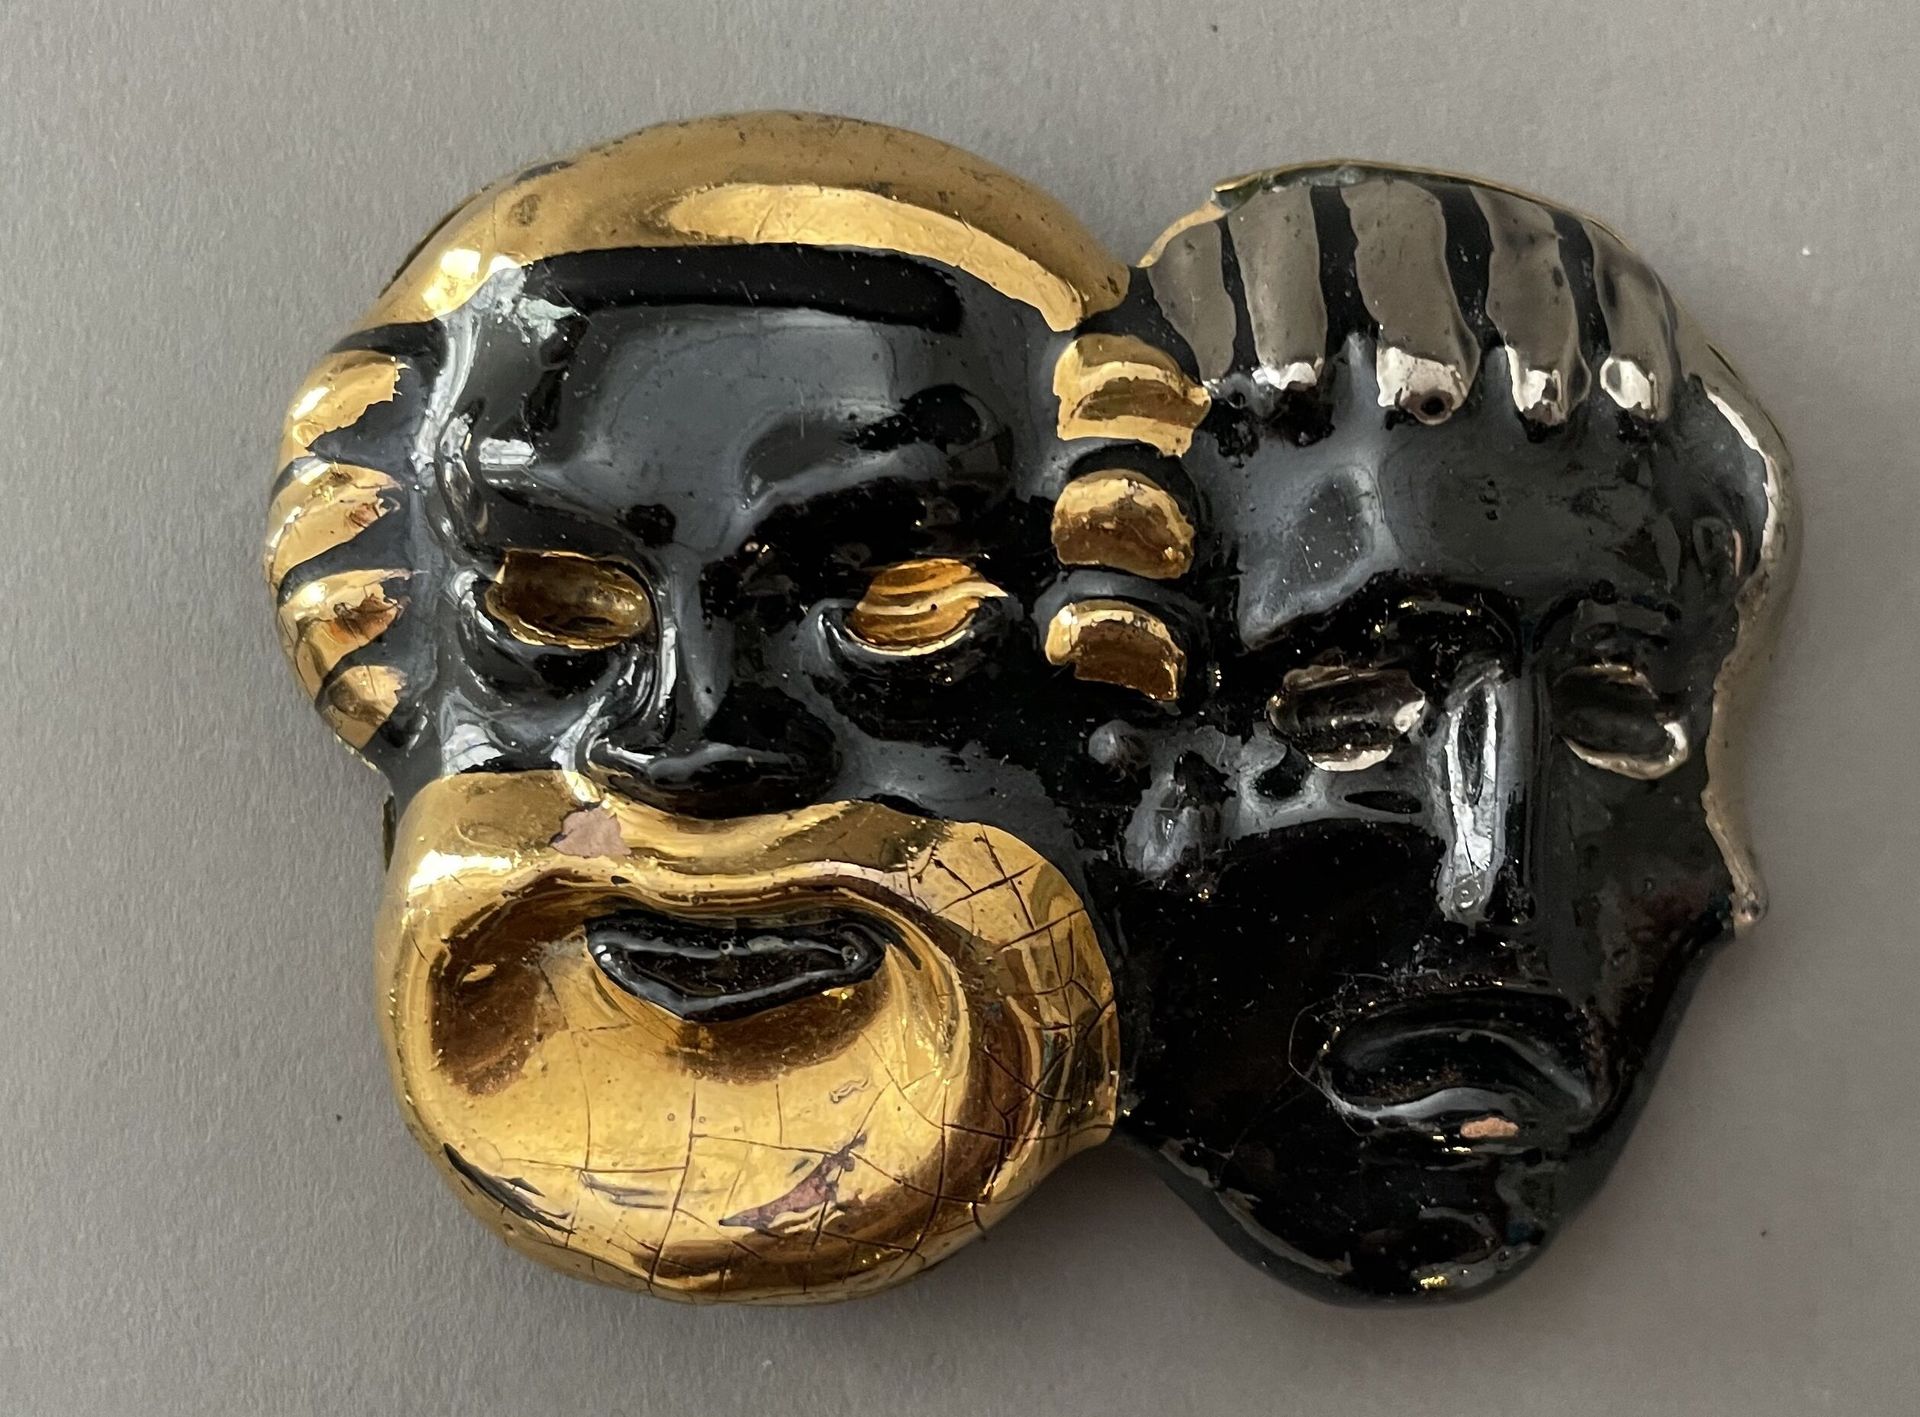 Null 高级时装的陶瓷皮带扣，约1940年，黑色、金色和银色的釉面陶瓷扣，带有仿古面具装饰，安装在鎏金铜板上，（2个缺口），6.3 x 8厘米。 

拍卖品可&hellip;